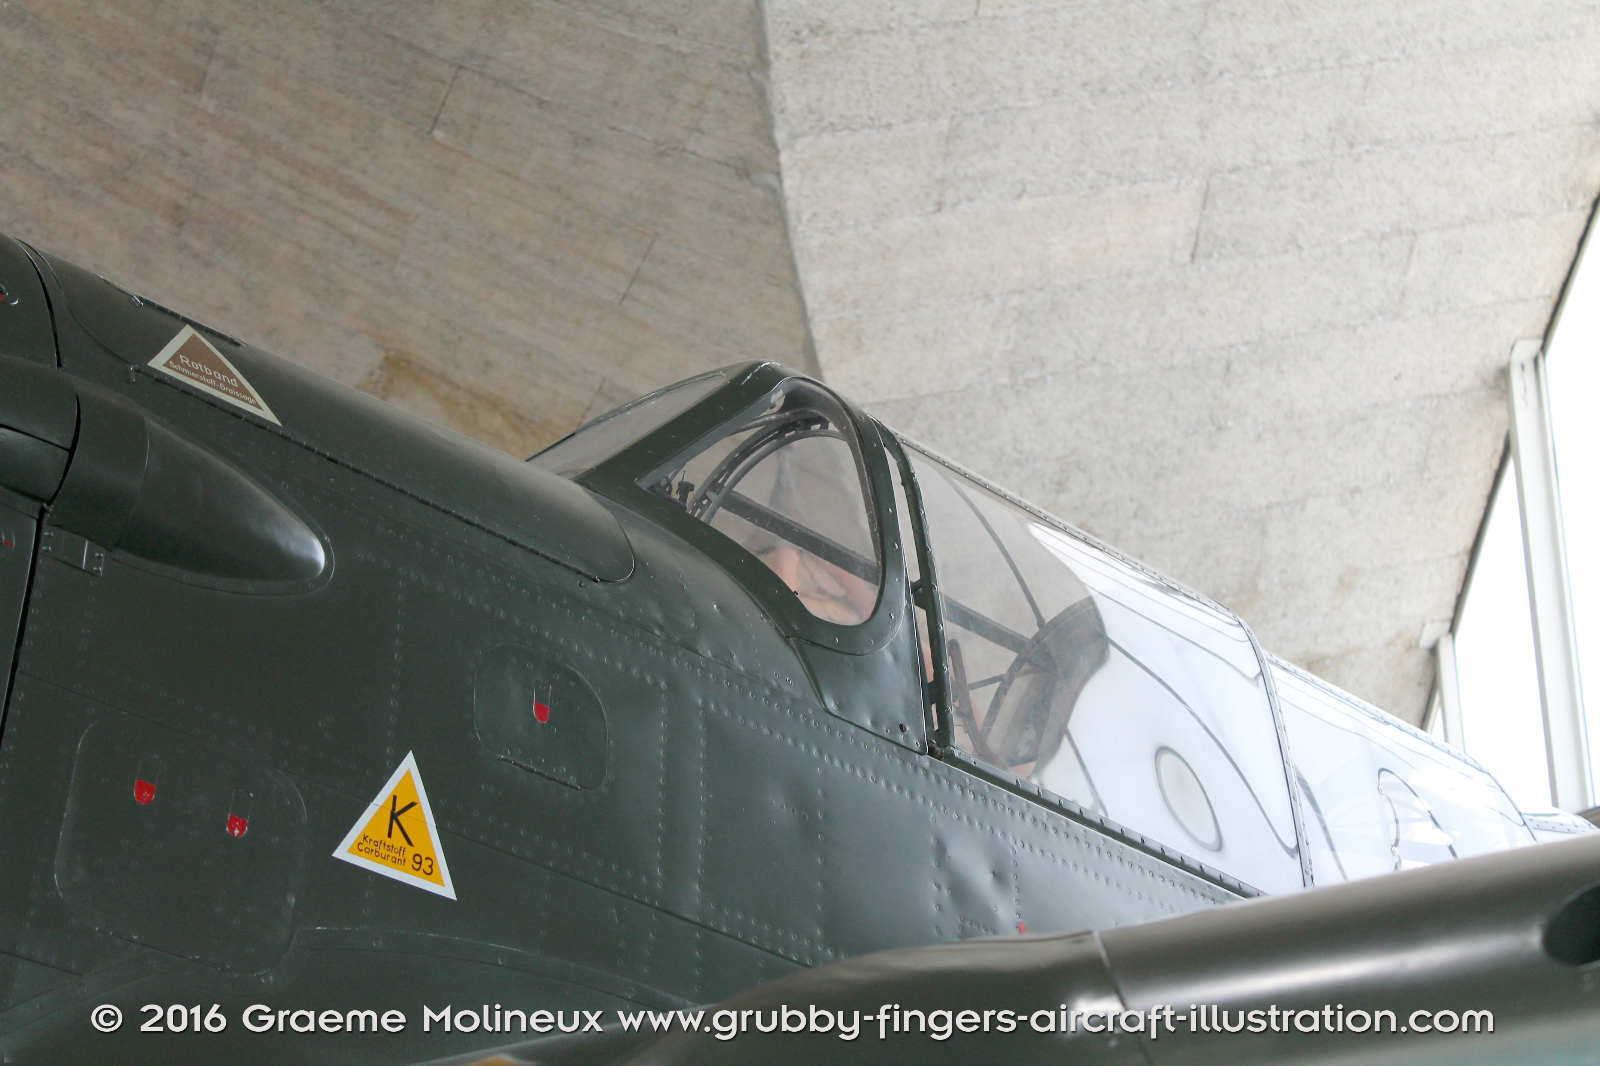 K+W_C-36_C-534_Swiss_Air_Force_Museum_2015_36_GrubbyFingers